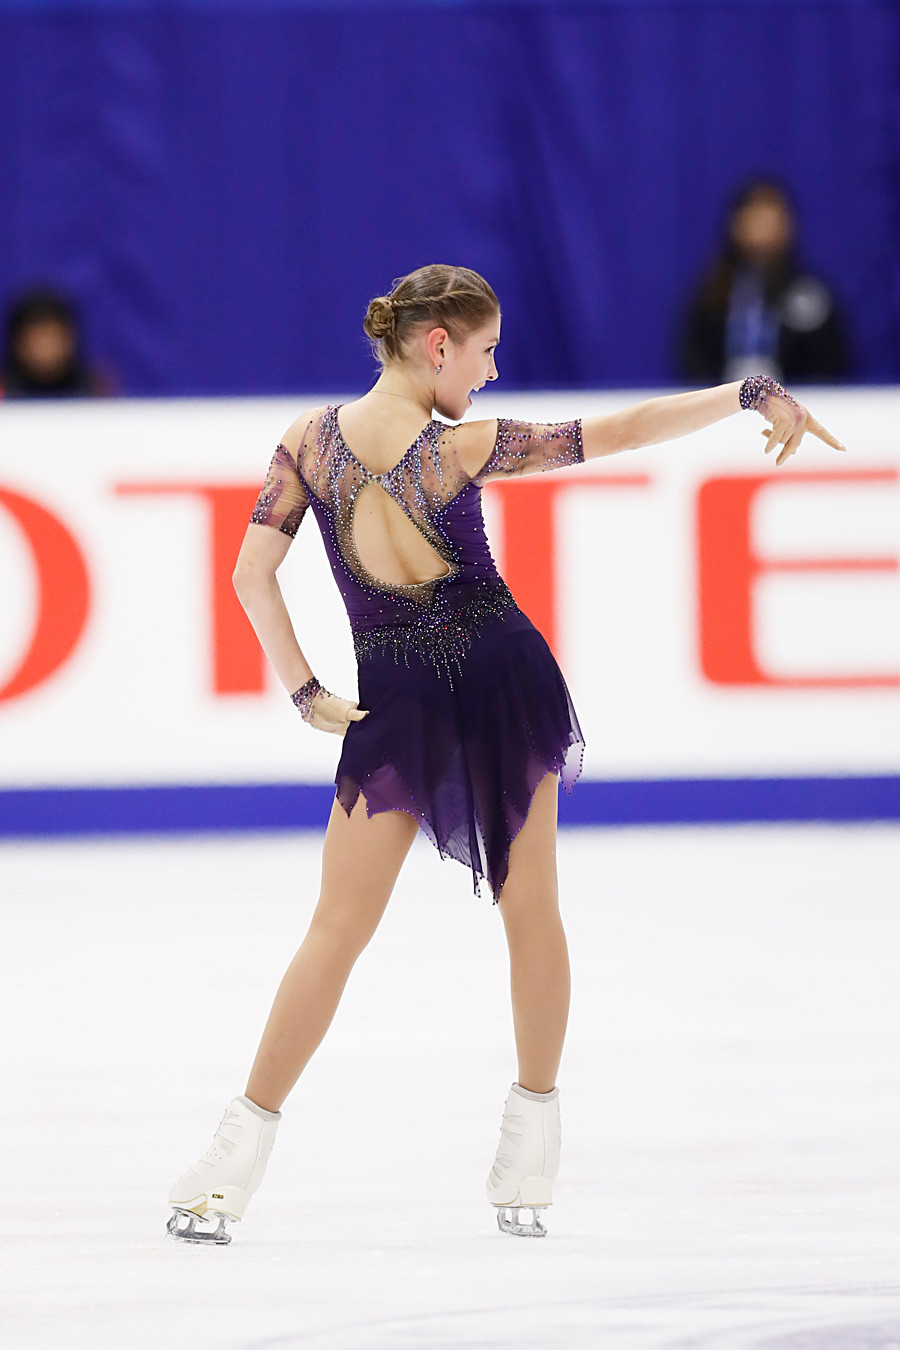 Alena Kostornaia performs Women's Free Skating program at ISU Grand Prix of Figure Skating 2019 NHK Trophy in Japan